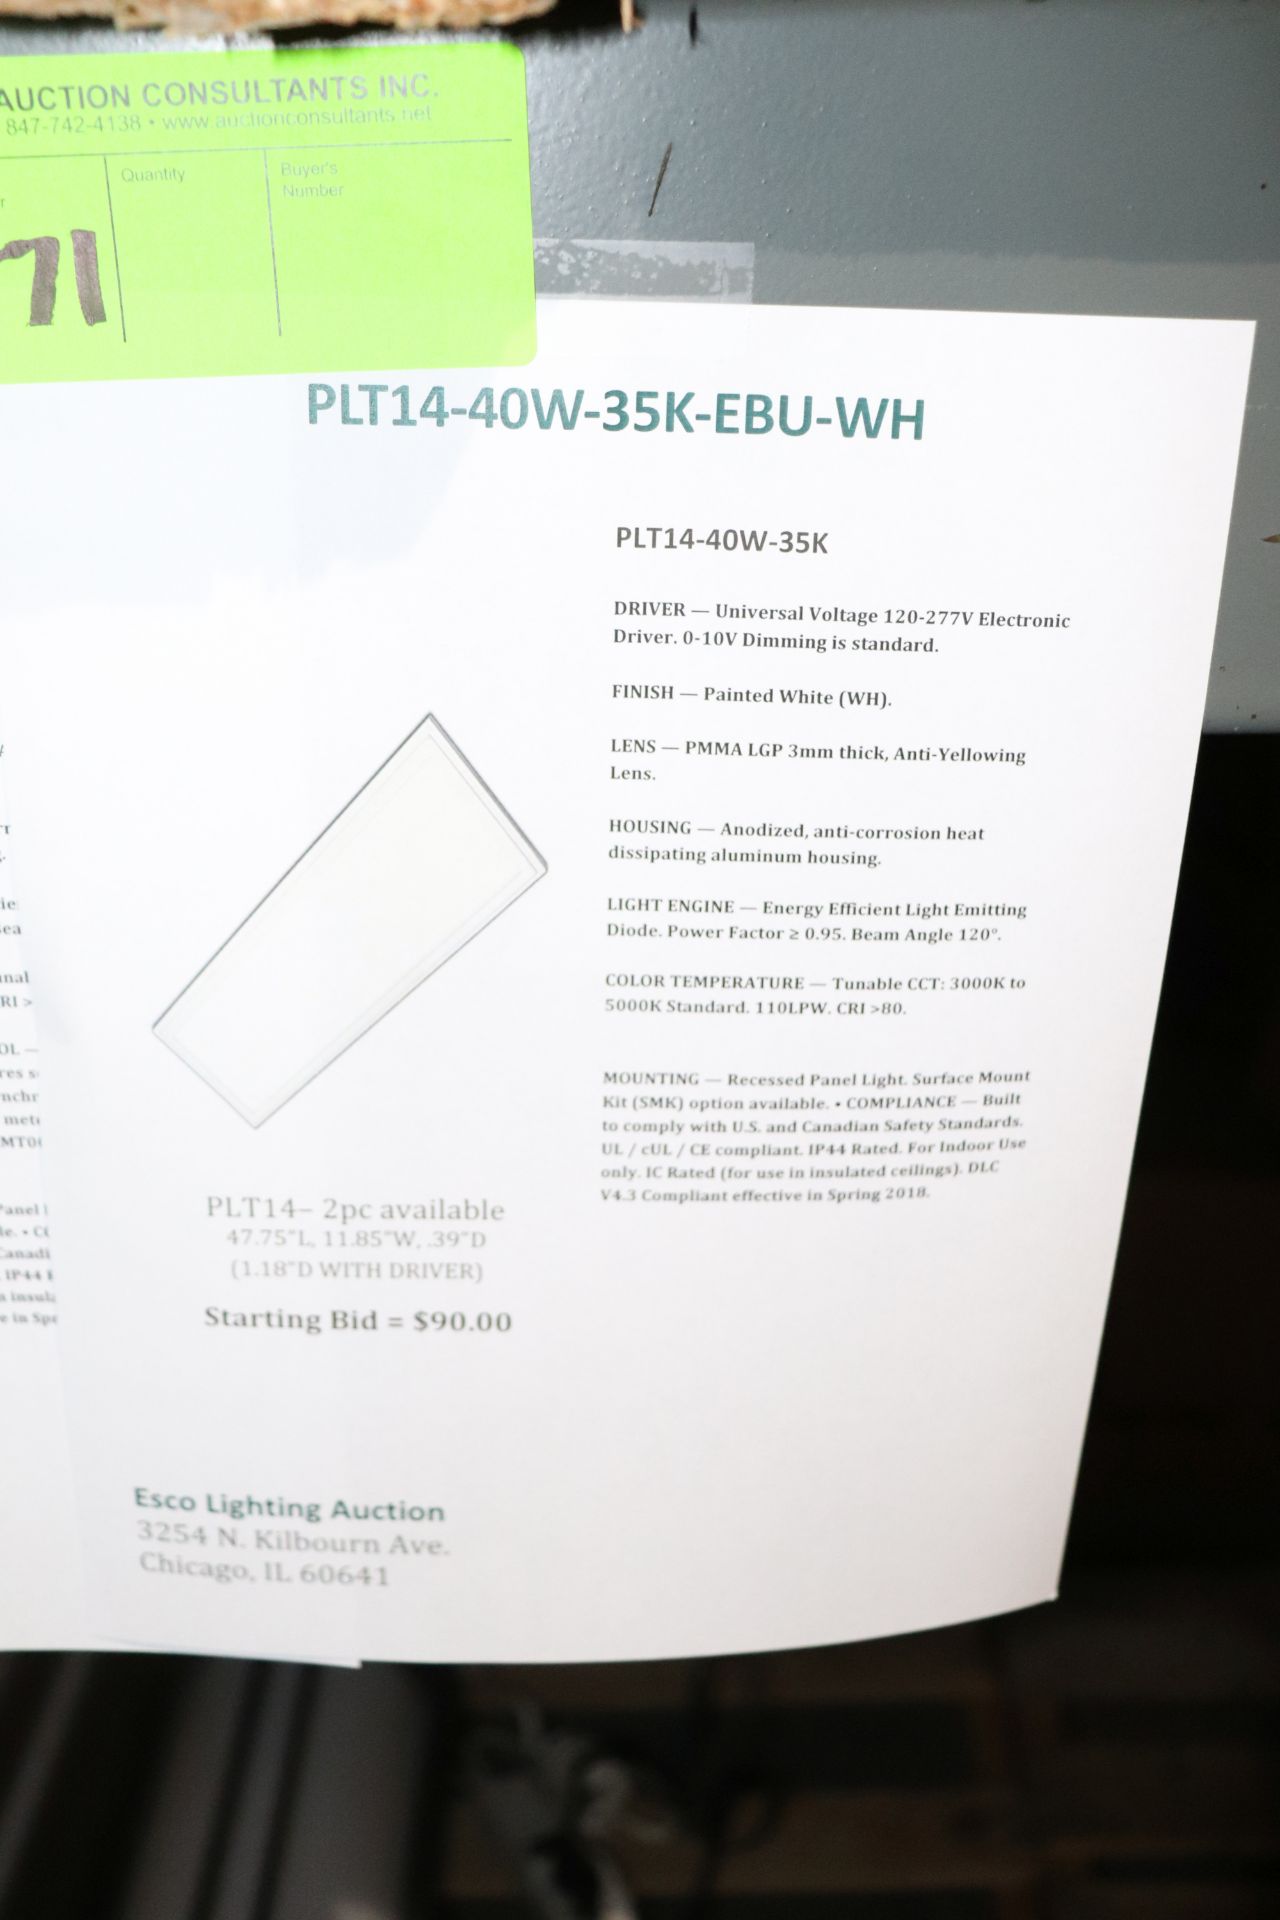 PLT14-40W-35K-EBU-WH light fixture, 2 pieces available - Image 2 of 2